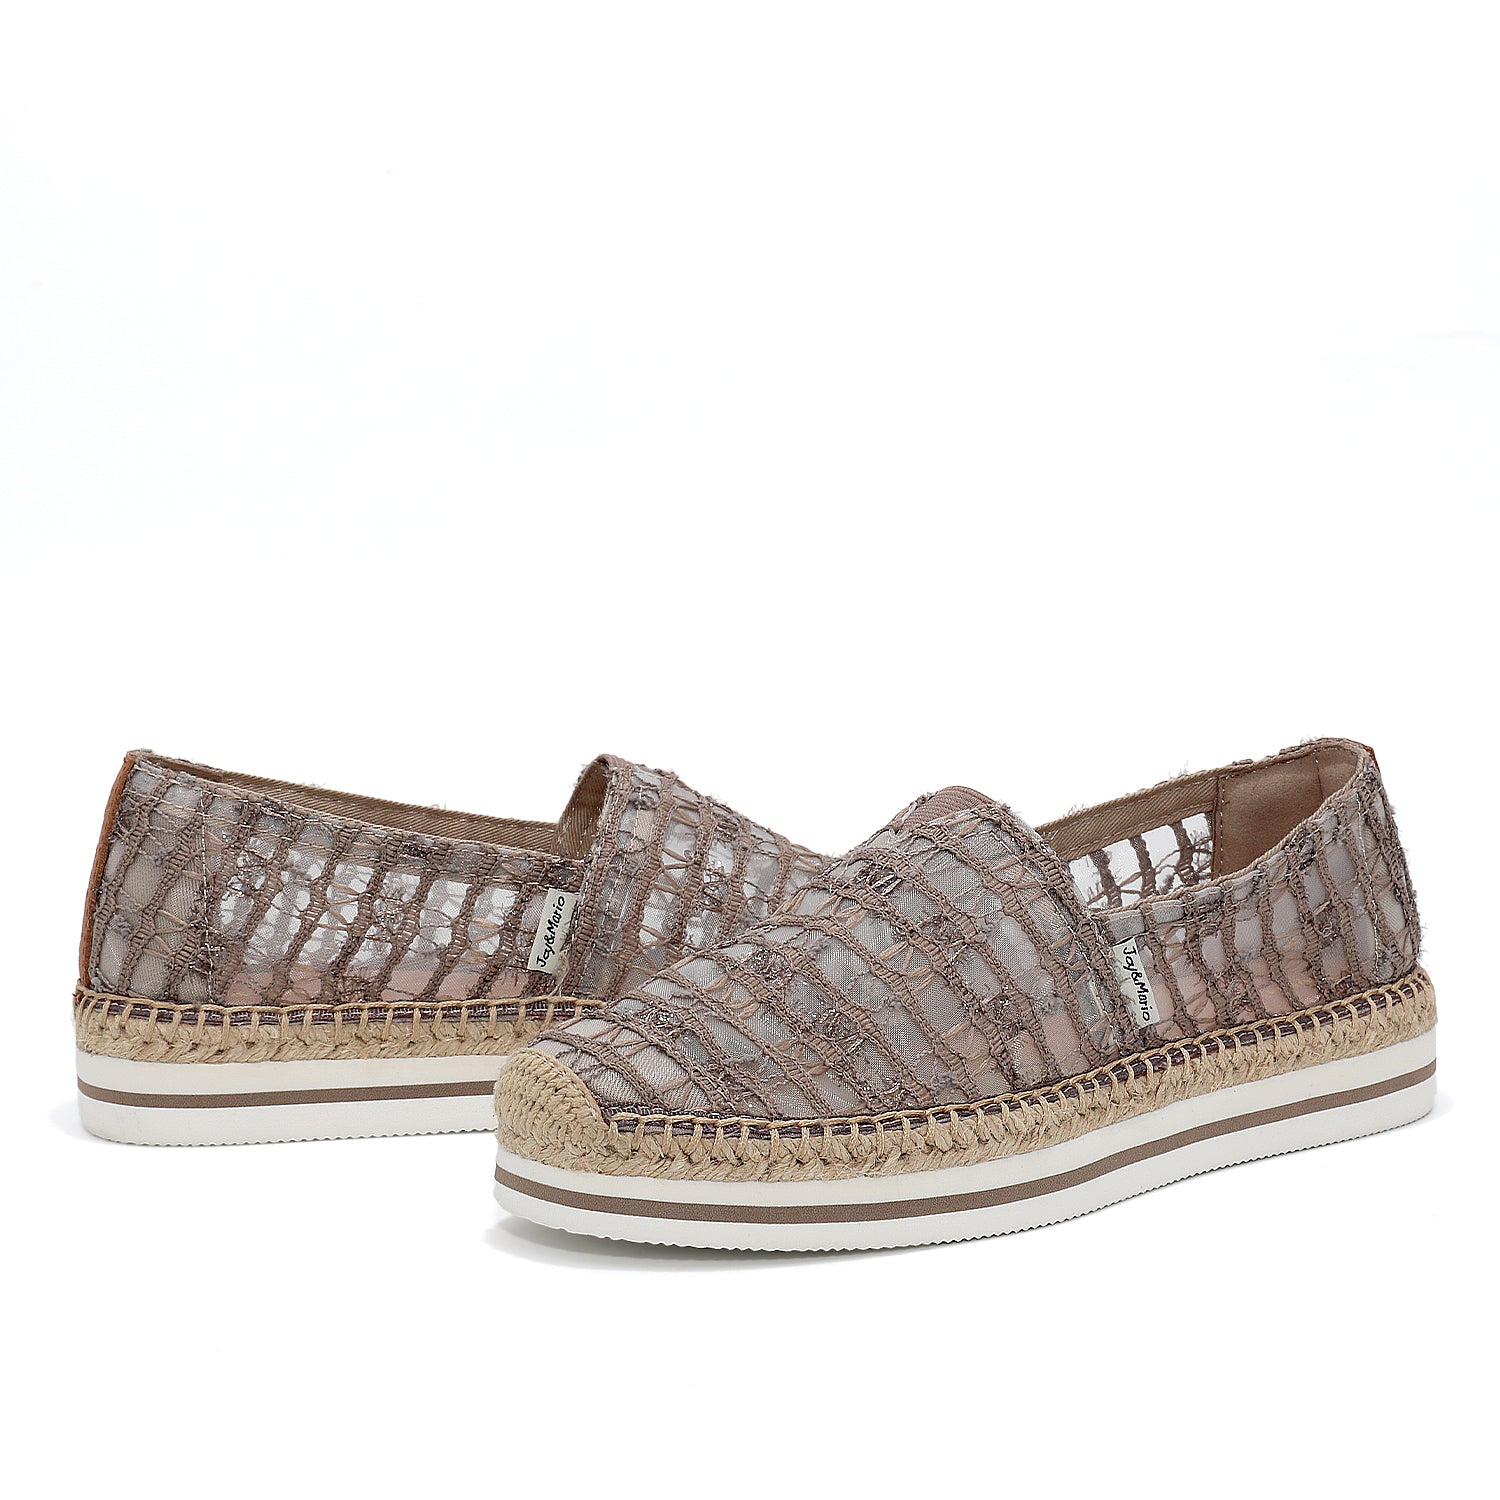 JOY&MARIO Handmade Women’s Slip-On Espadrille Mesh Loafers Platform in Khaki-A51395W